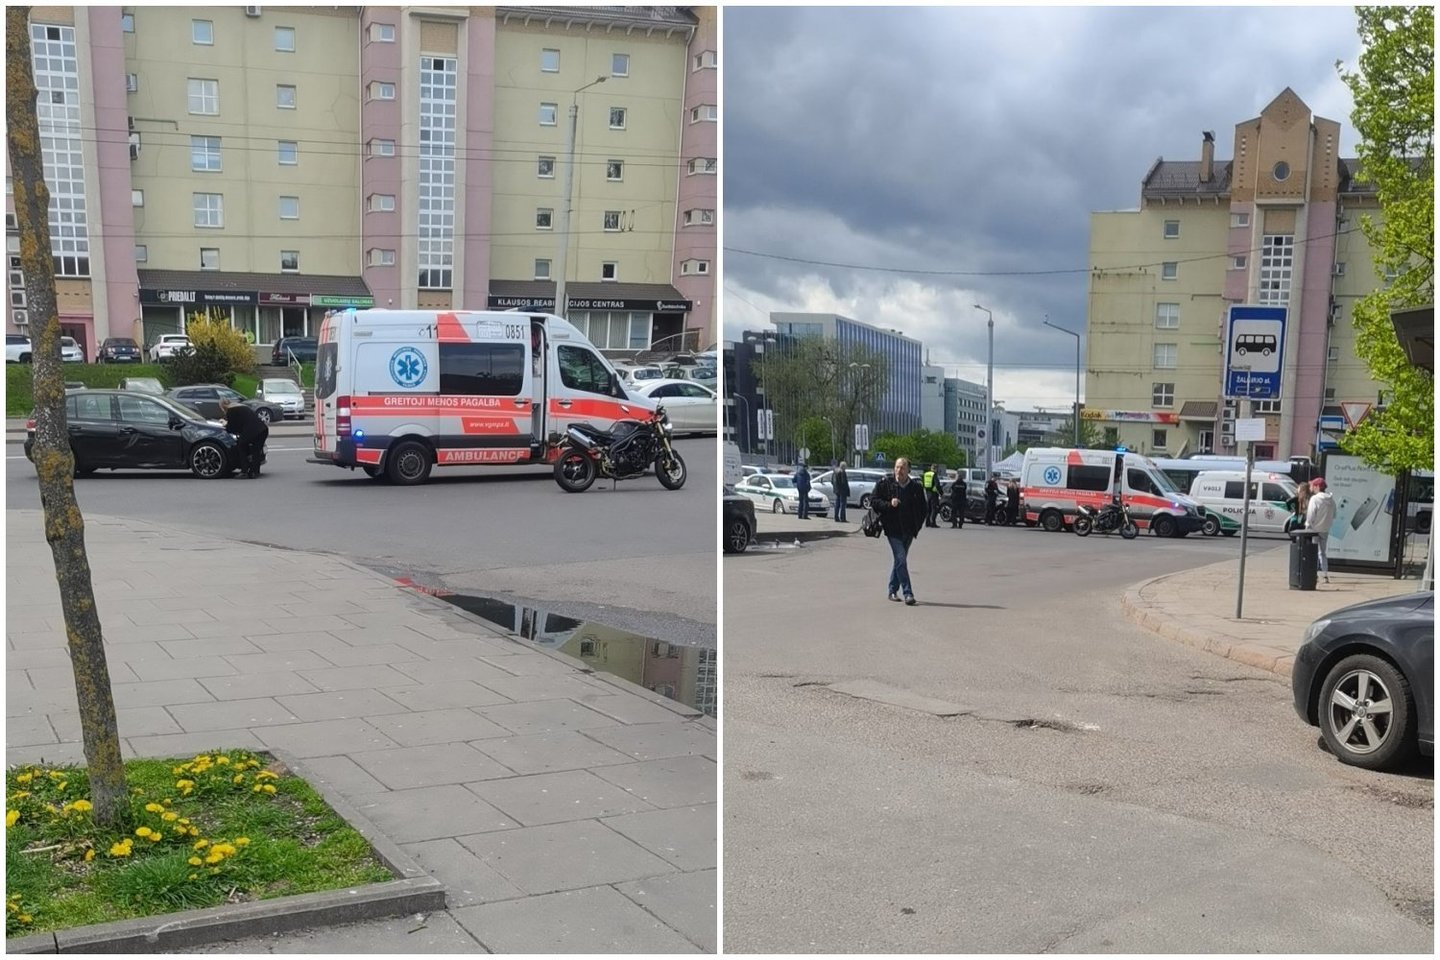  Vilniuje automobilis partrenkė motociklininką, tarp vairuotojų kilo konfliktas.<br>D.Bikuvienės nuotr./lrytas.lt koliažas